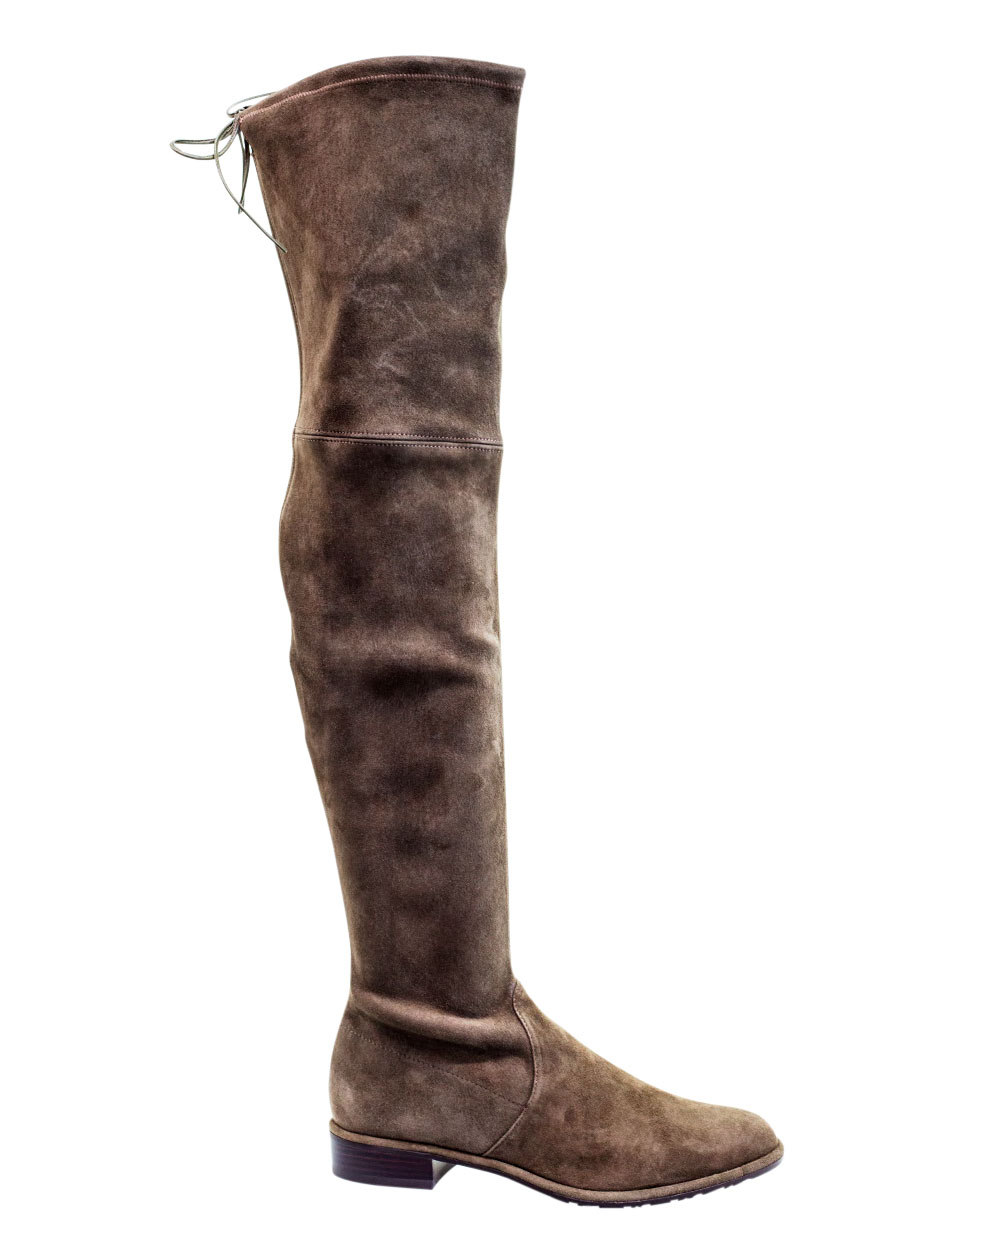 Stuart Weitzman knee-high boots